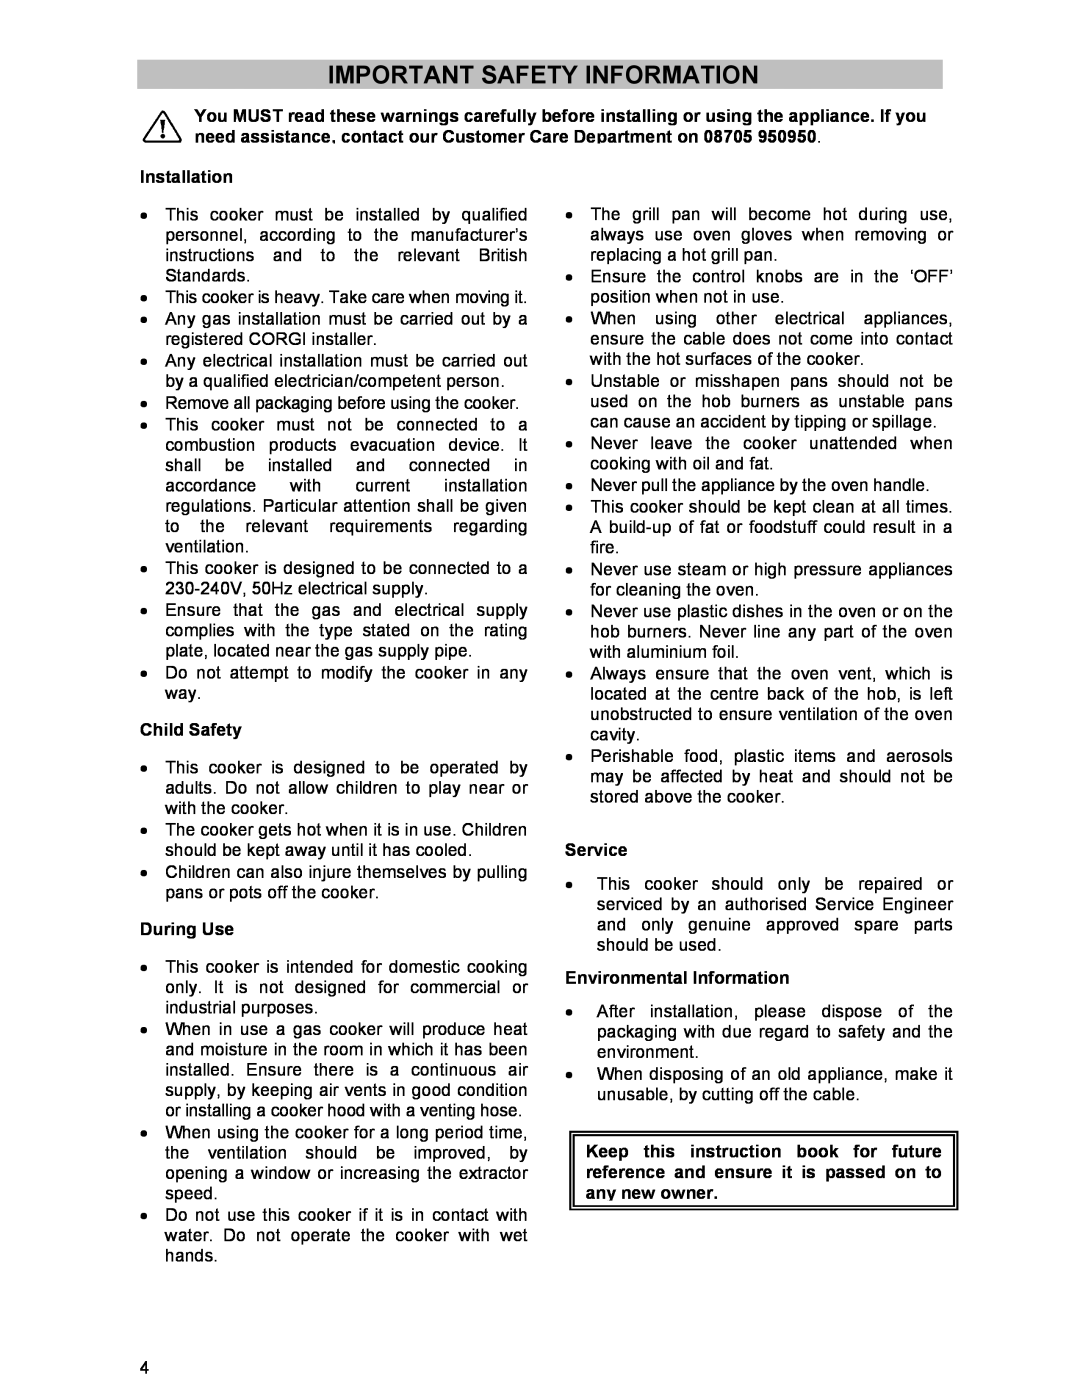 Electrolux SIG 233 manual Important Safety Information 